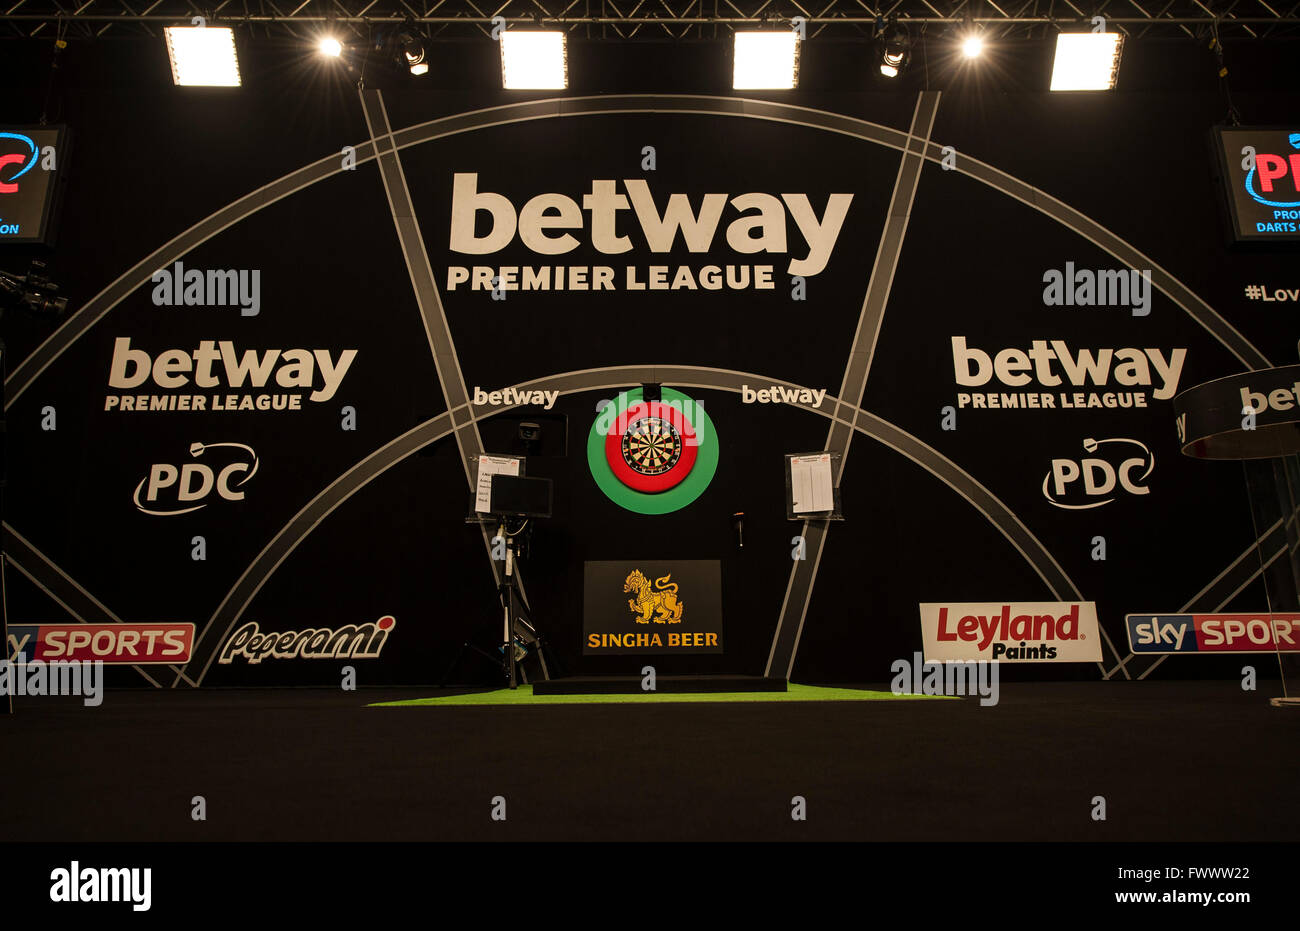 Die Sheffield Arena, Sheffield, UK. 7. April 2016. Betway PDC Premier League Darts. Nacht 10